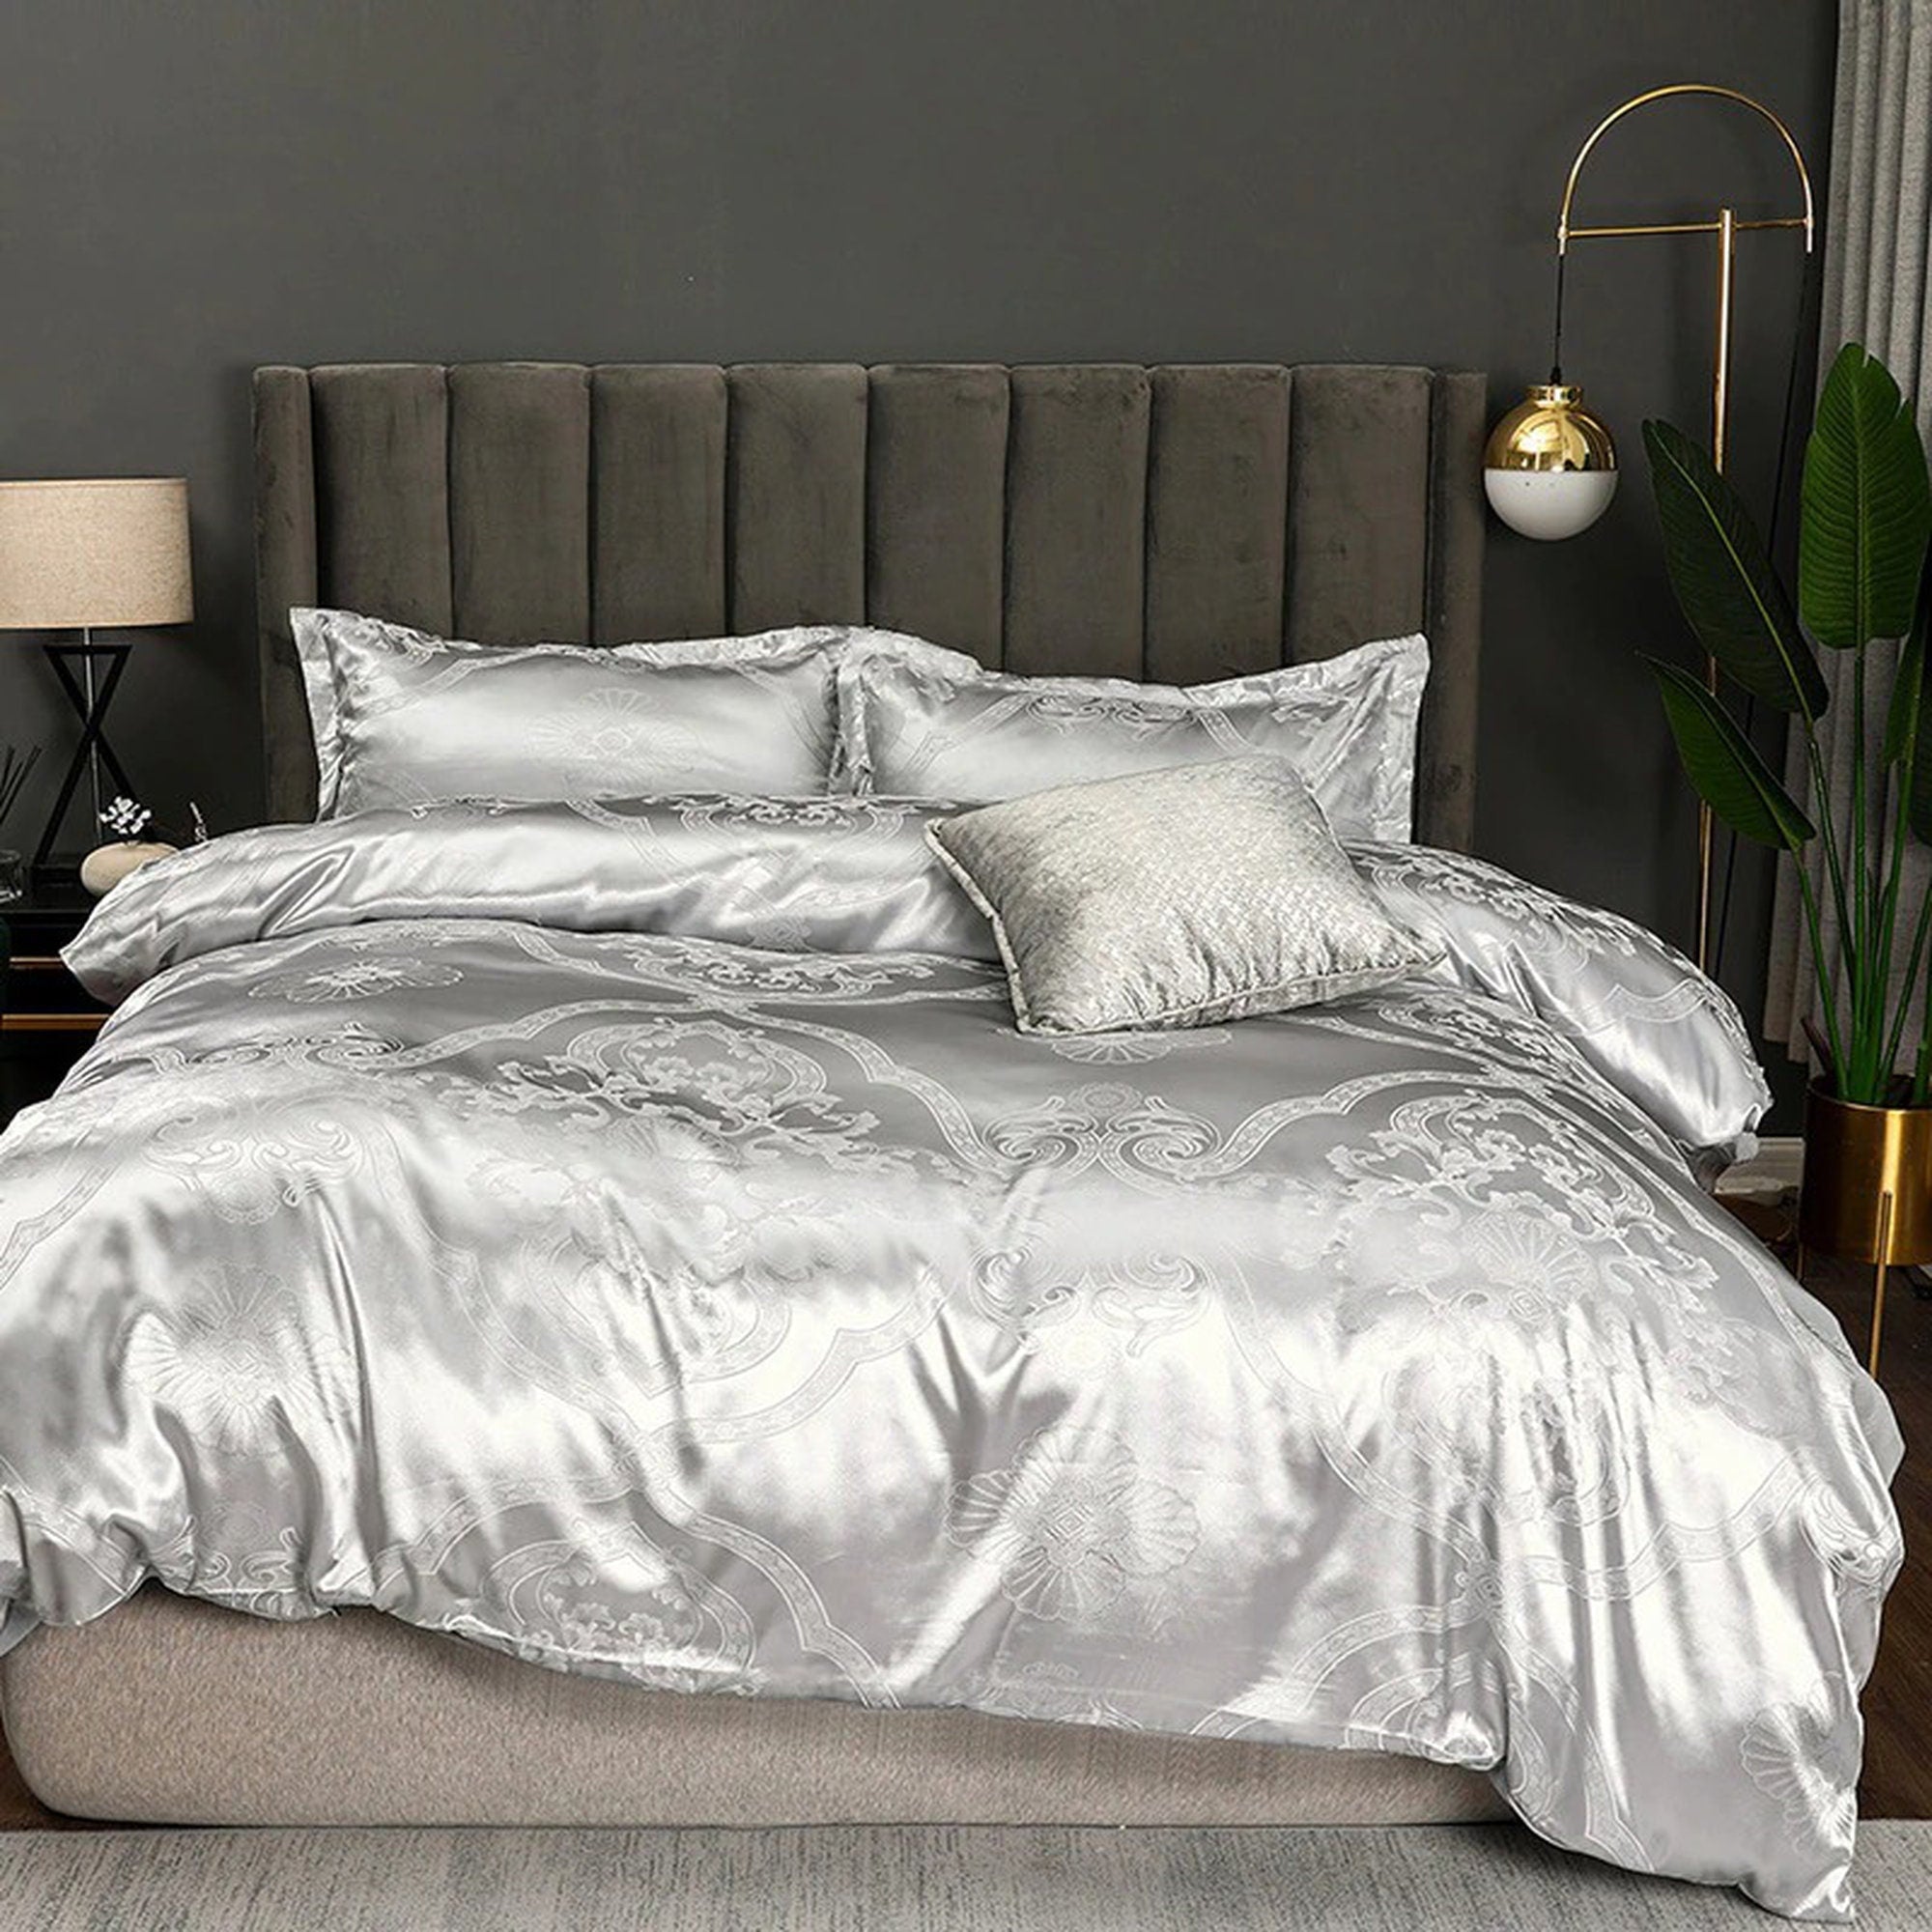 daintyduvet Luxury Silver Bedding made with Silky Jacquard Fabric, Damask Duvet Cover Set, Designer Bedding, Aesthetic Duvet King Queen Full Twin